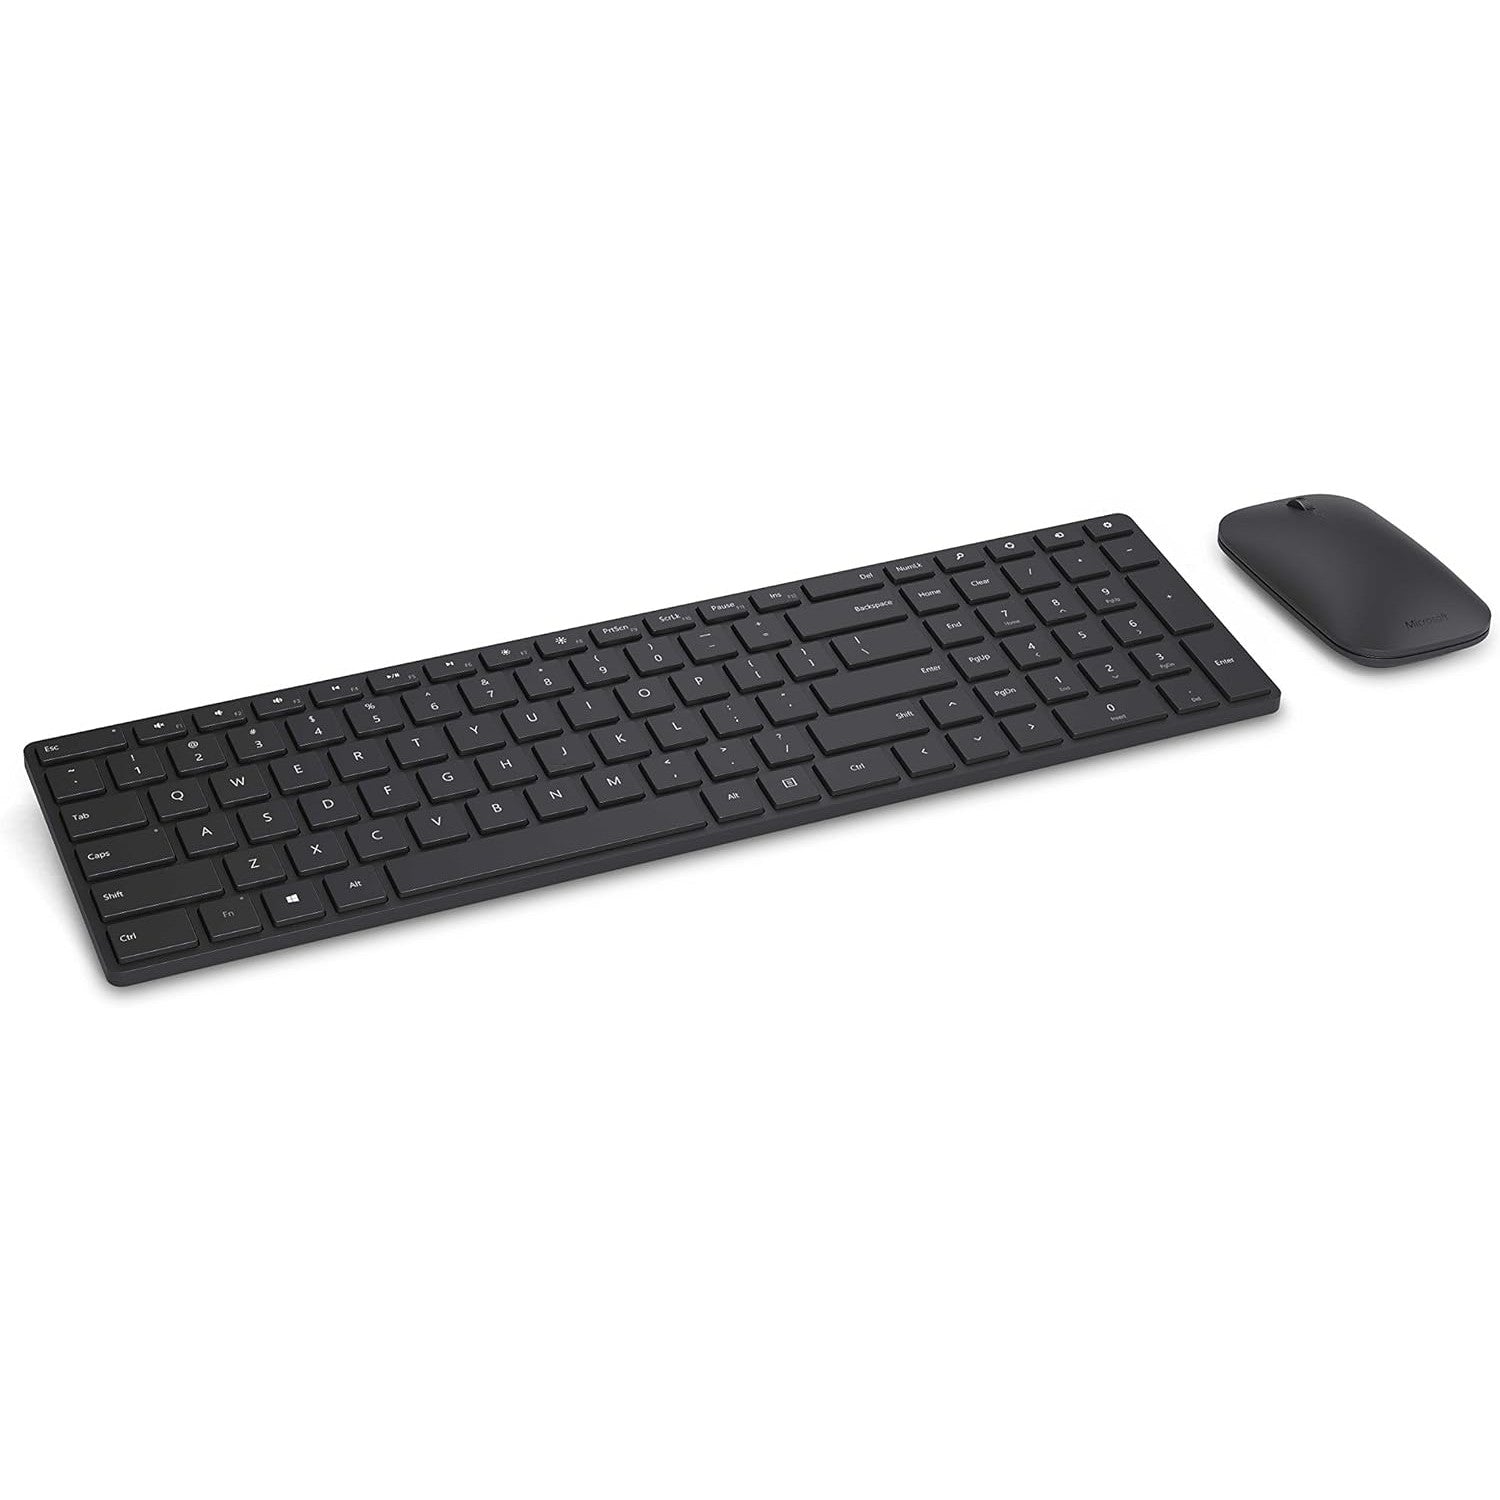 Microsoft Designer Bluetooth Desktop Keyboard and Mouse Set - New